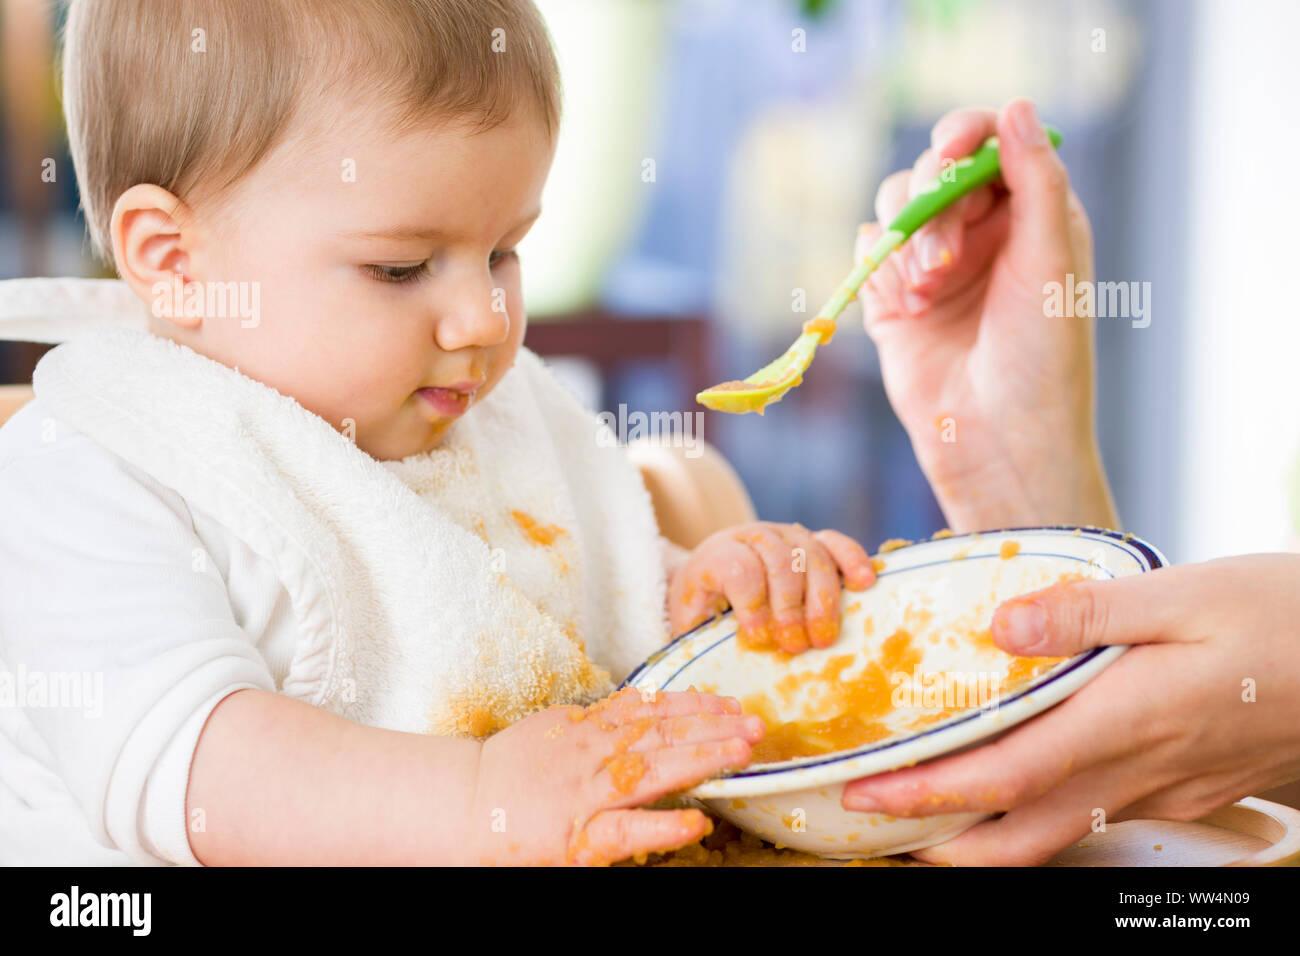 Sweet baby boy malpropre jouer avec la nourriture en mangeant. Banque D'Images